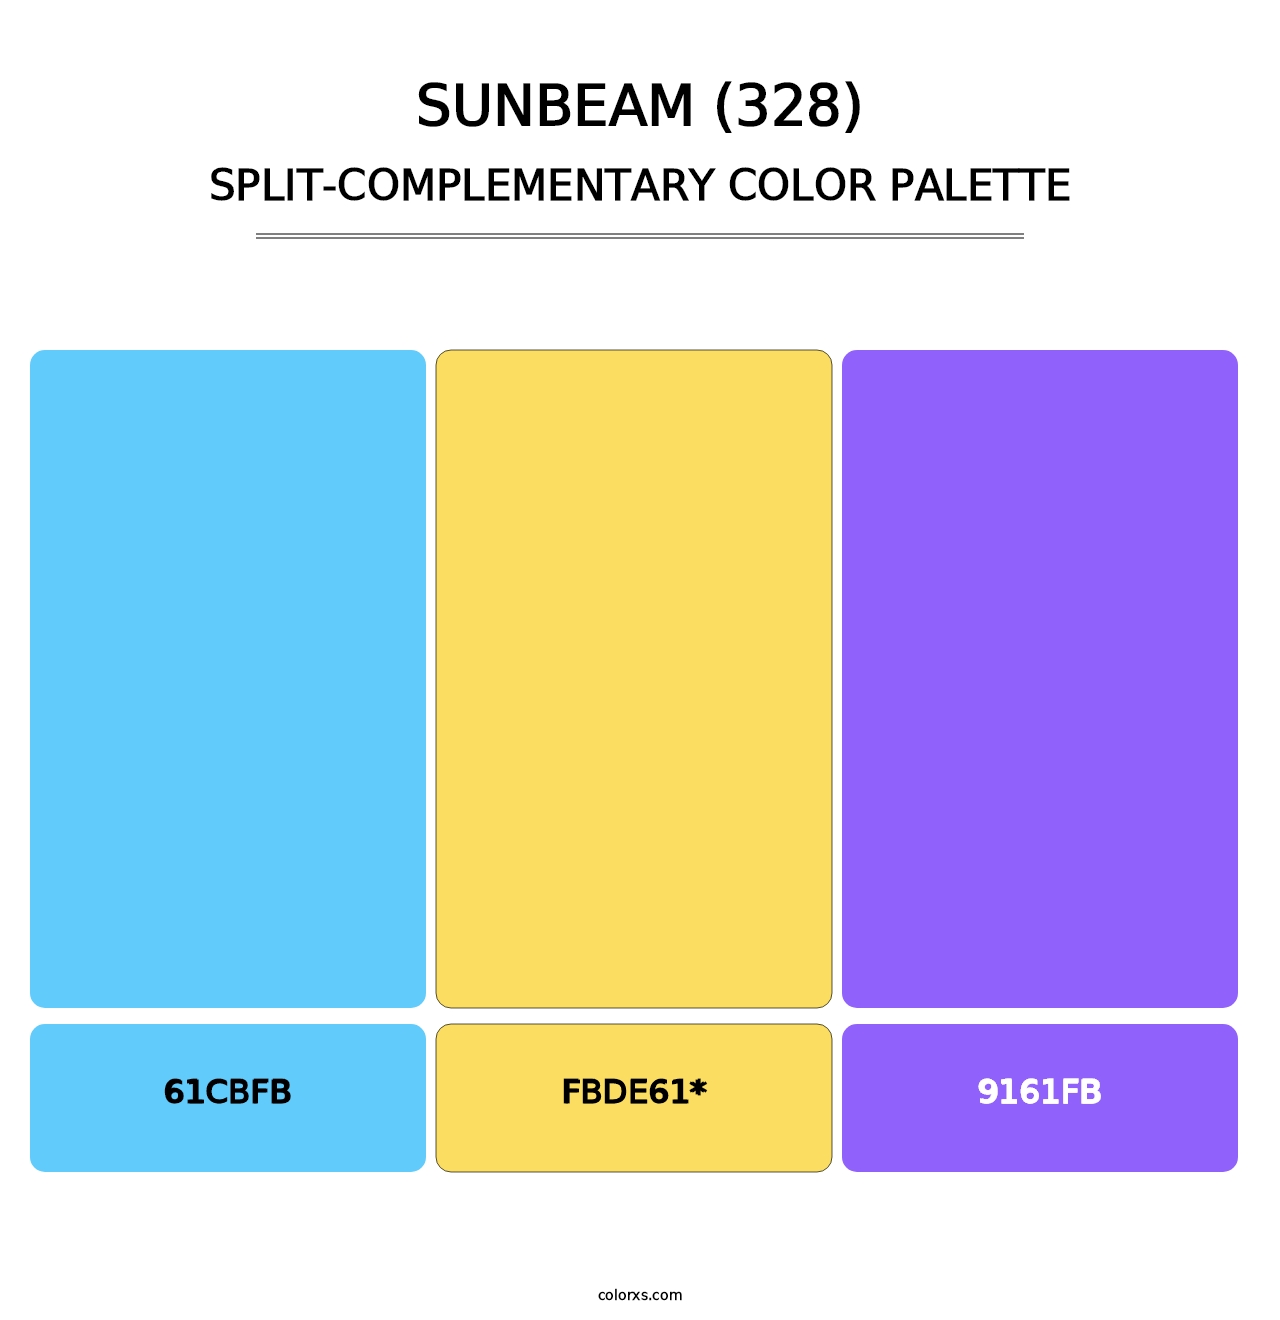 Sunbeam (328) - Split-Complementary Color Palette